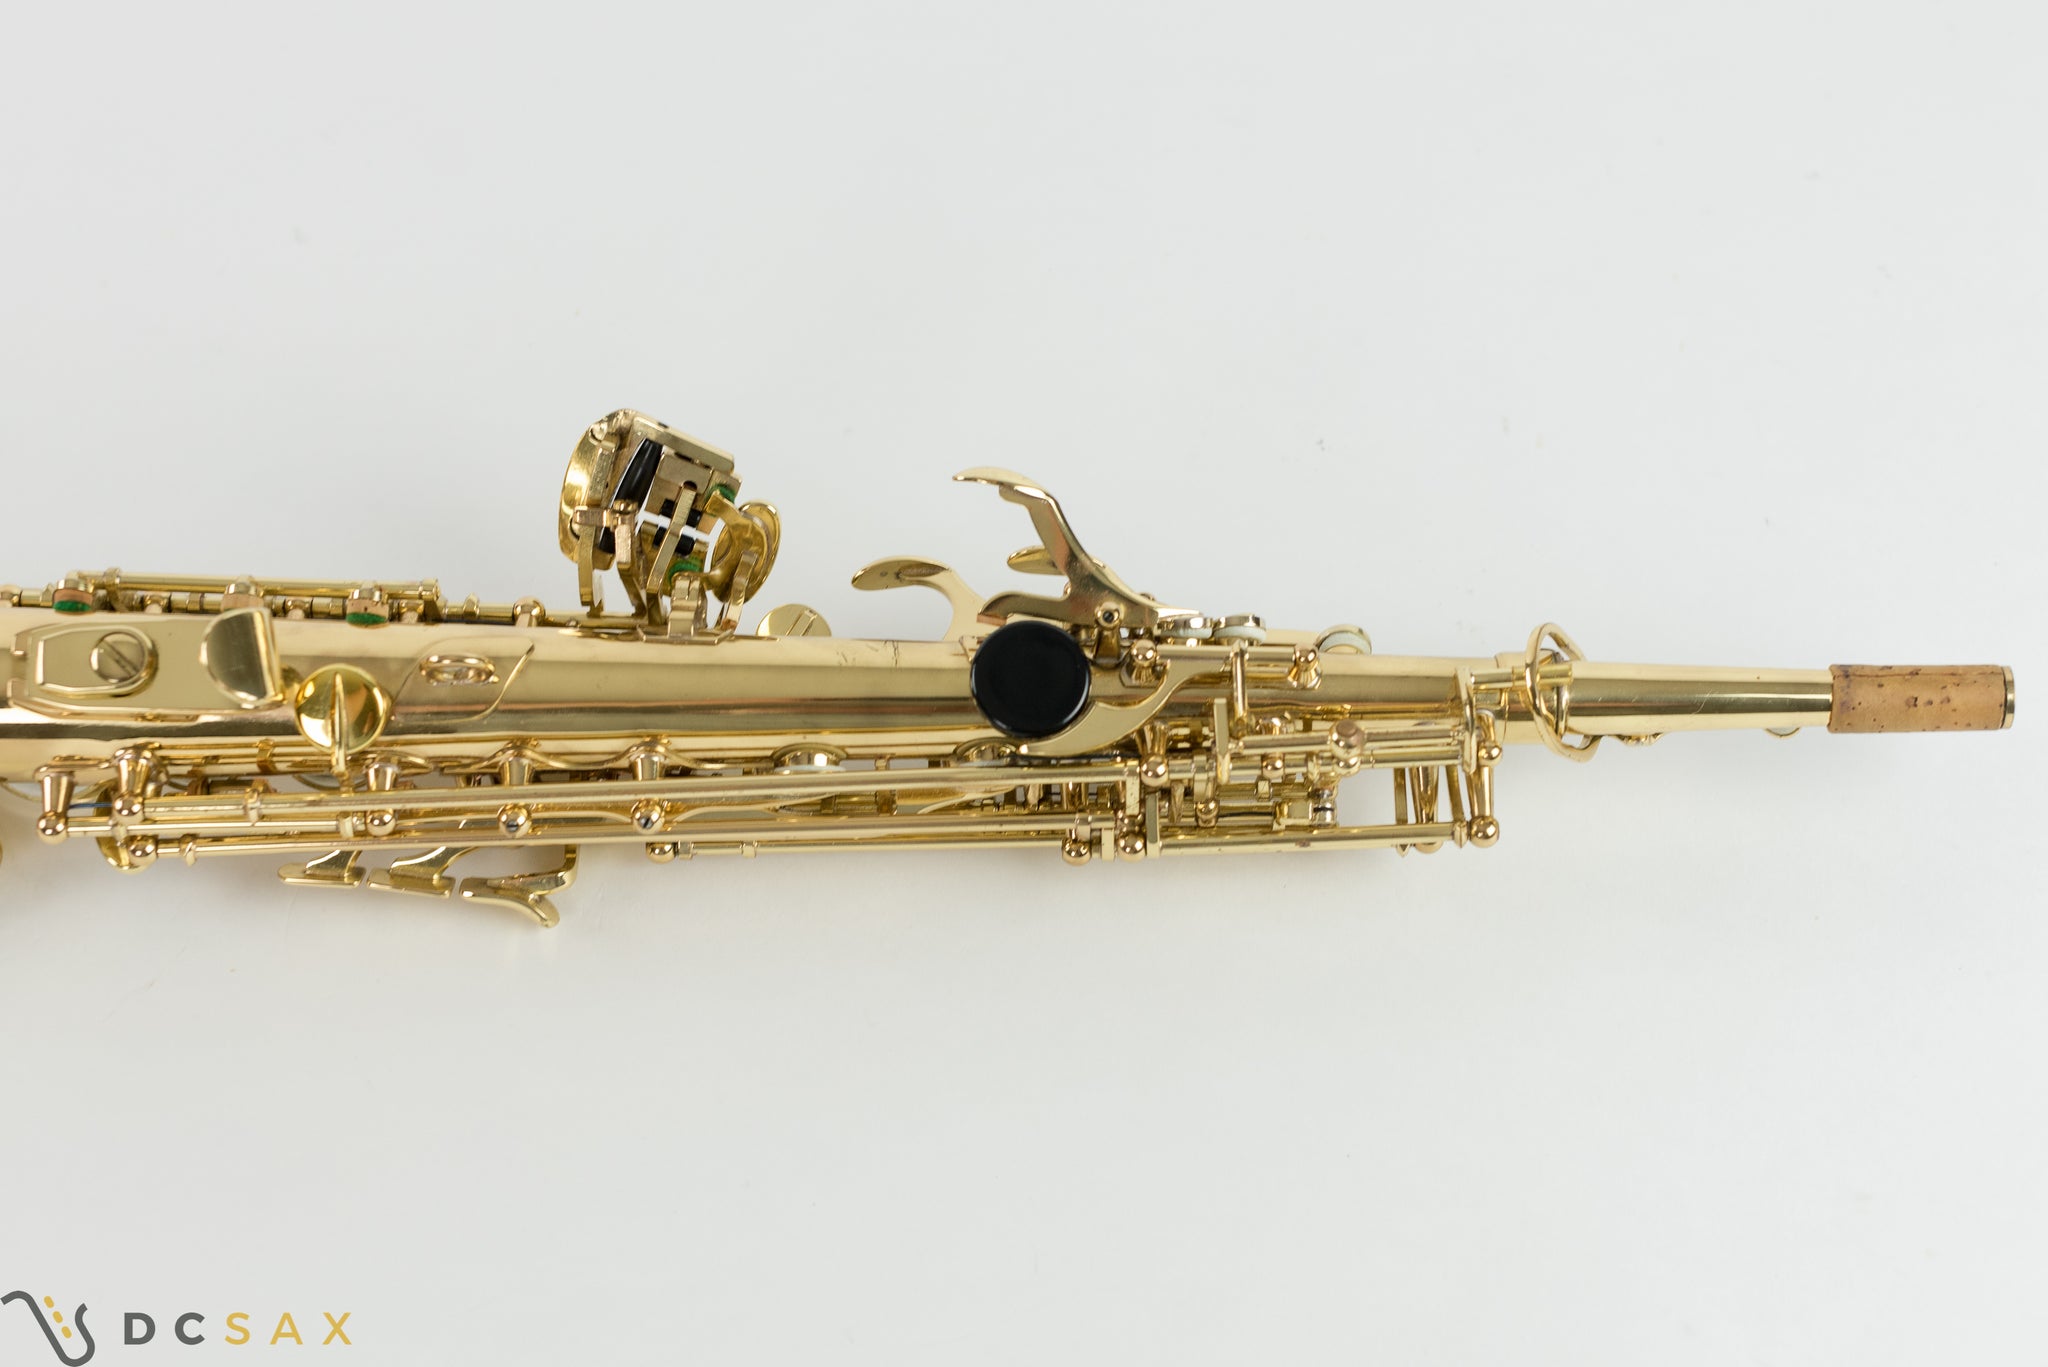 Selmer Series III Soprano Saxophone